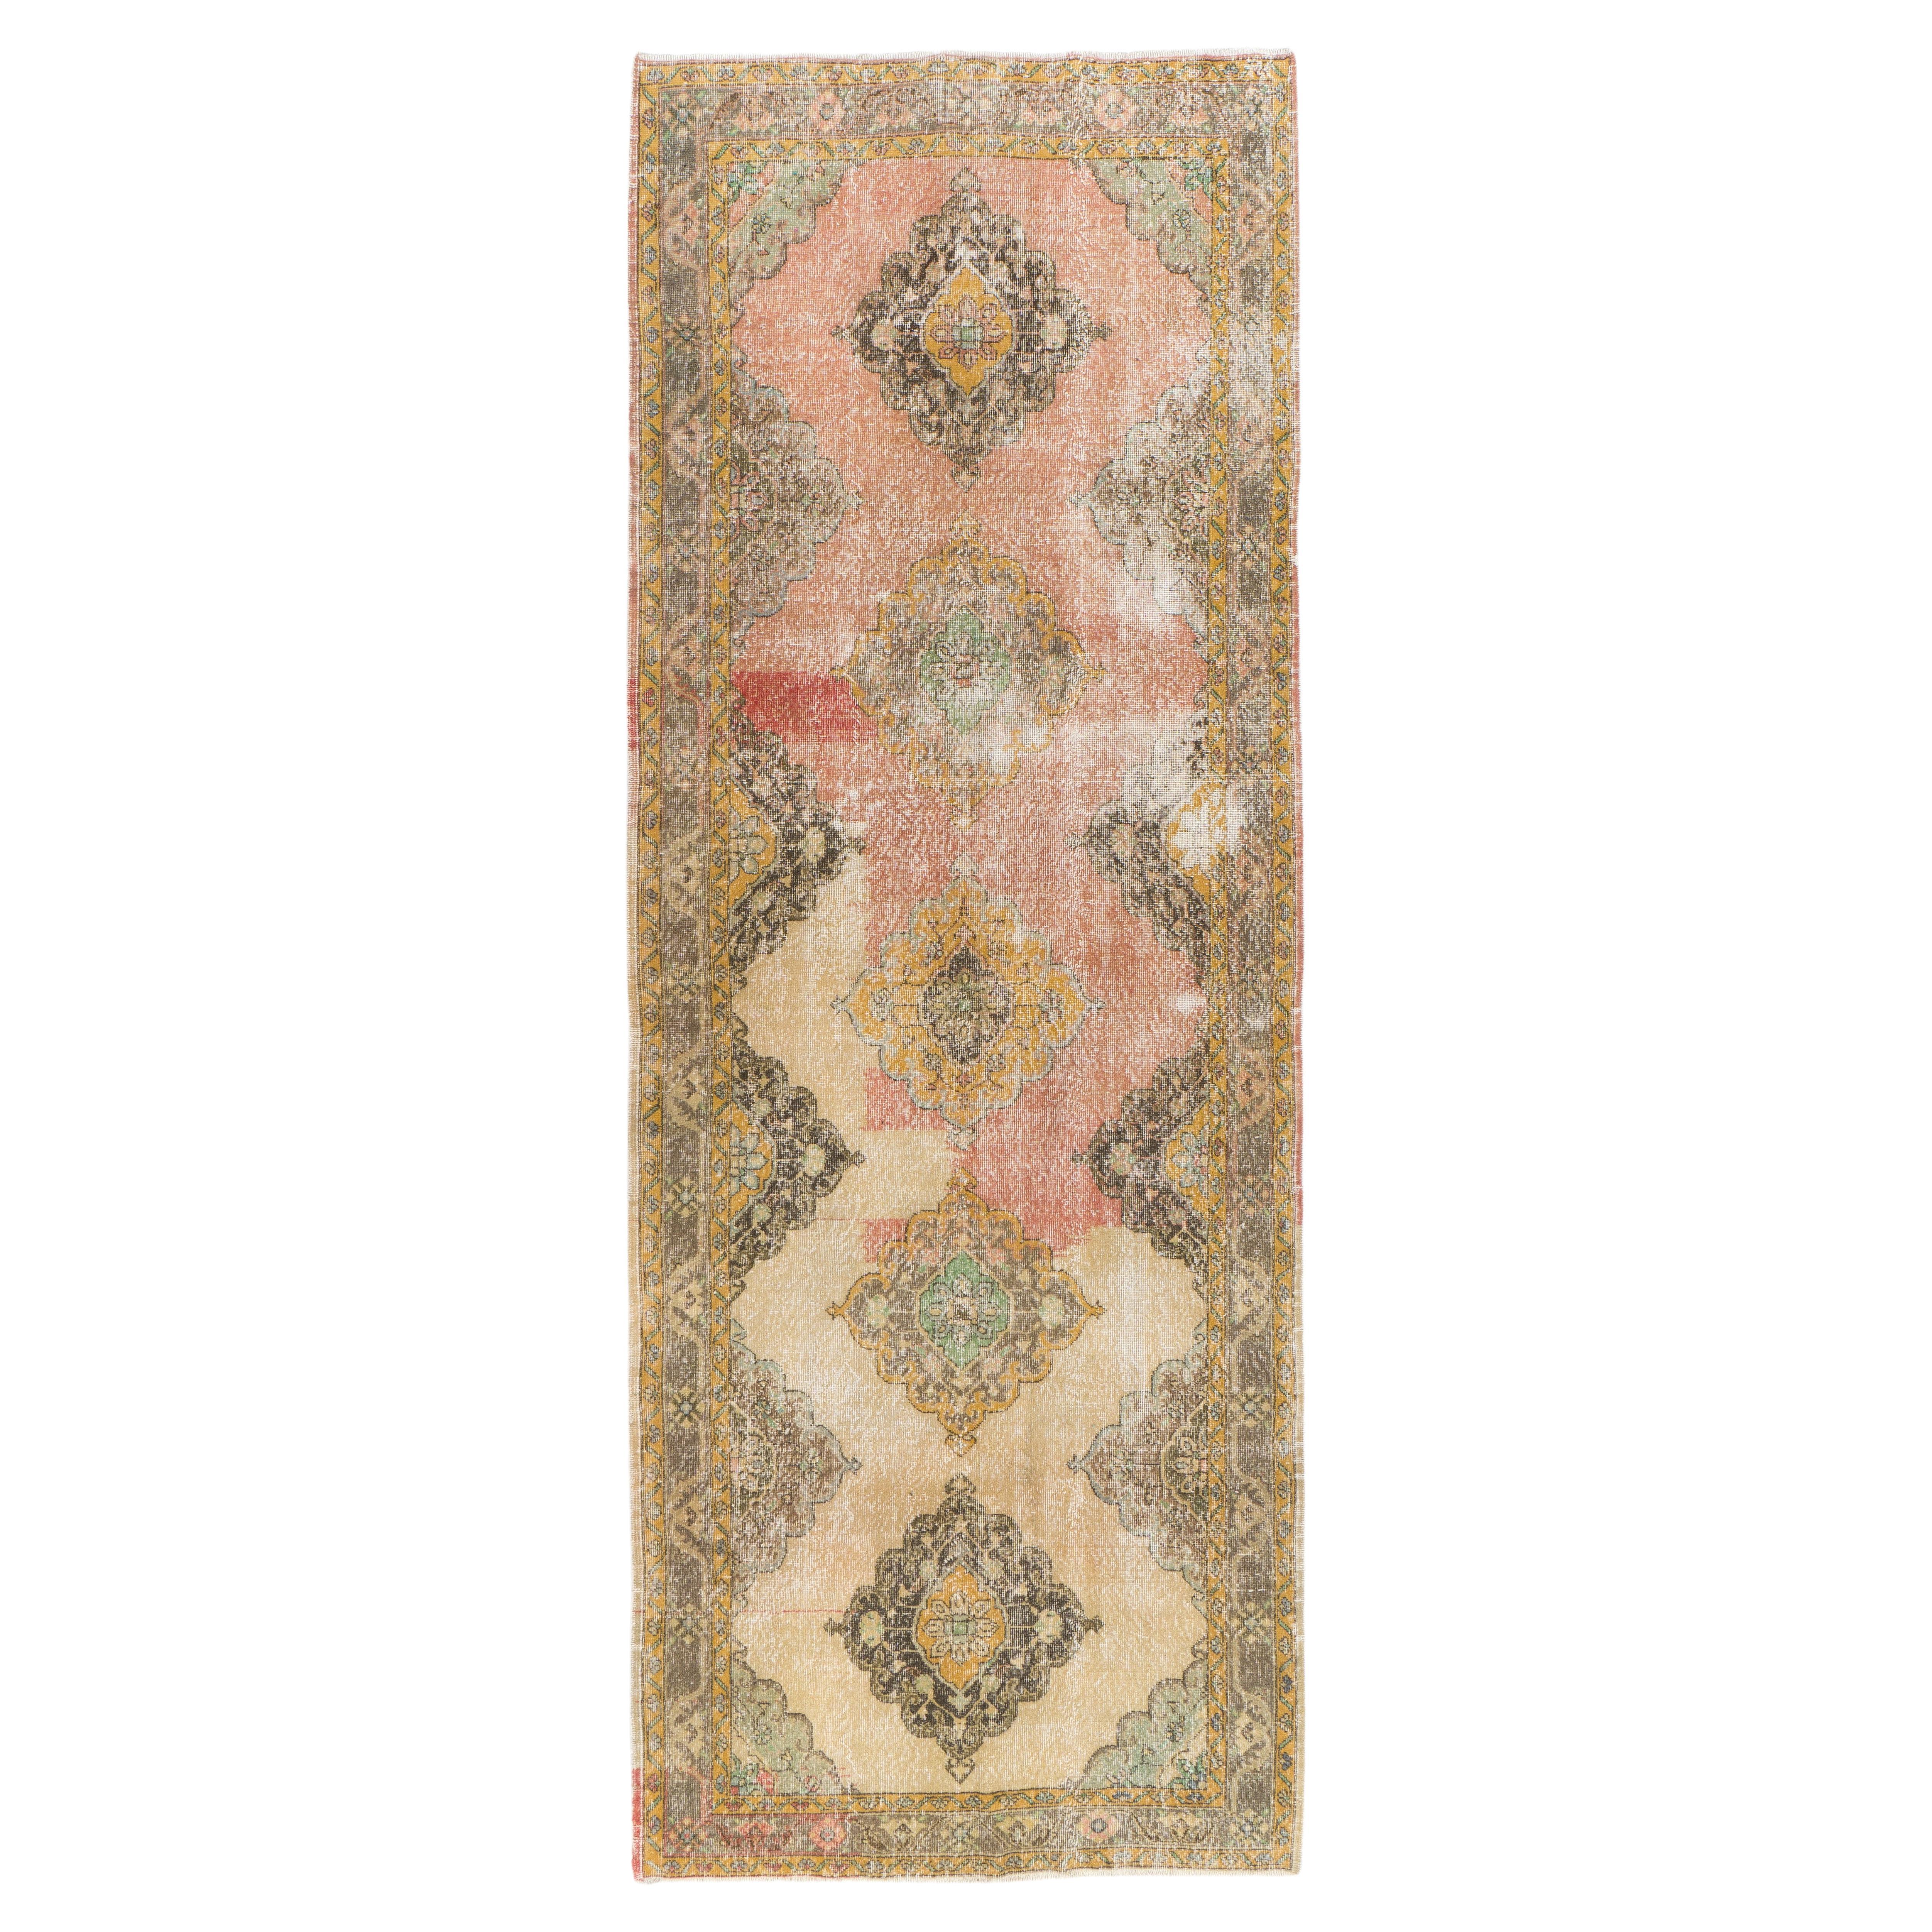 4.6x13 Ft Mid-Century Shabby Chic Anatolian Oushak Runner Rug in Soft Colors